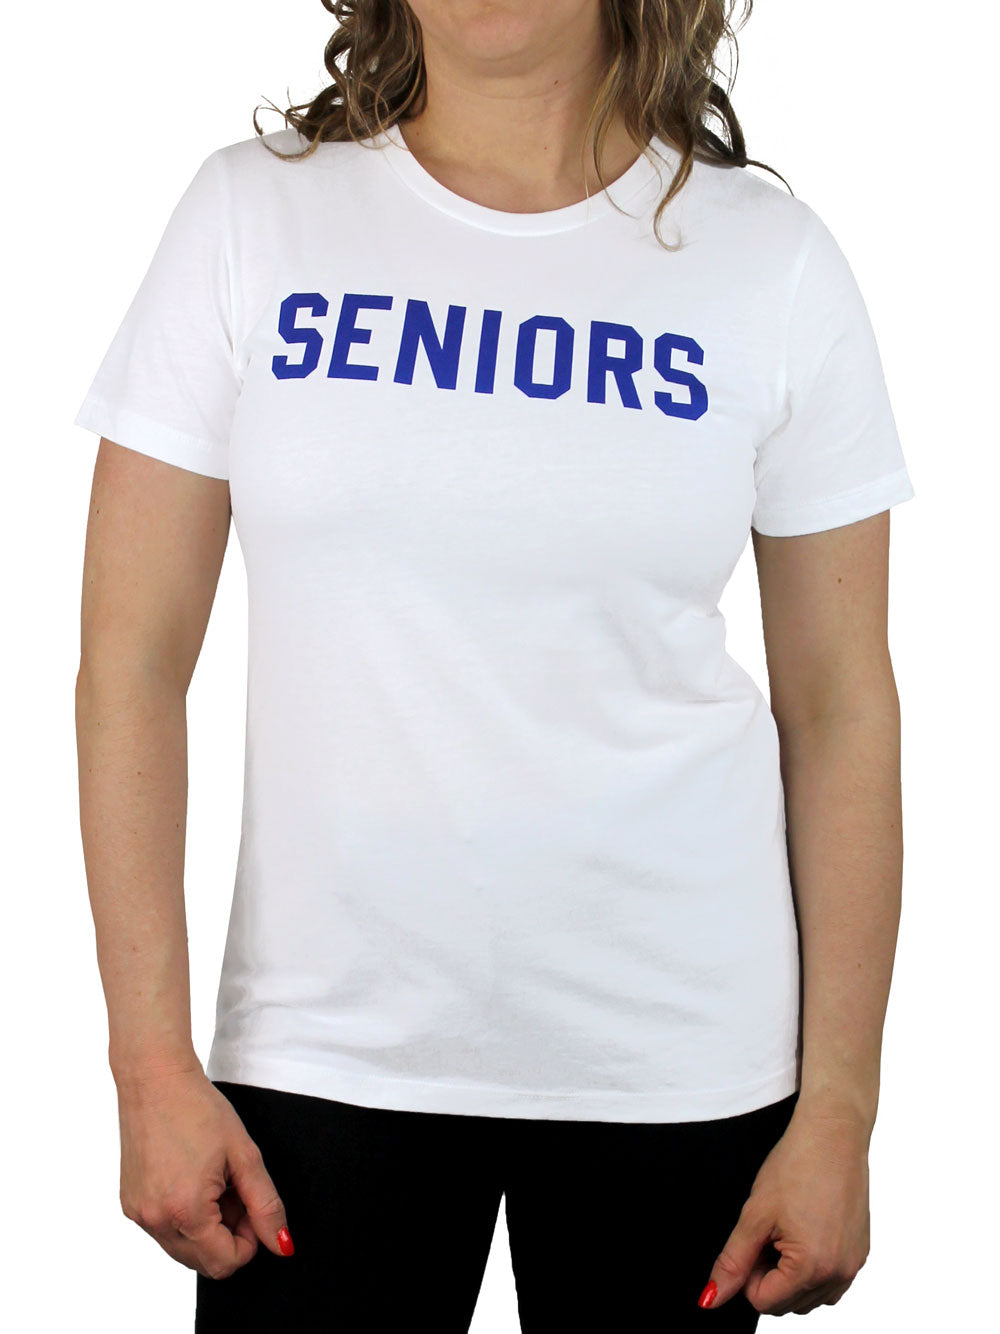 Seniors 77 Shirt Front View